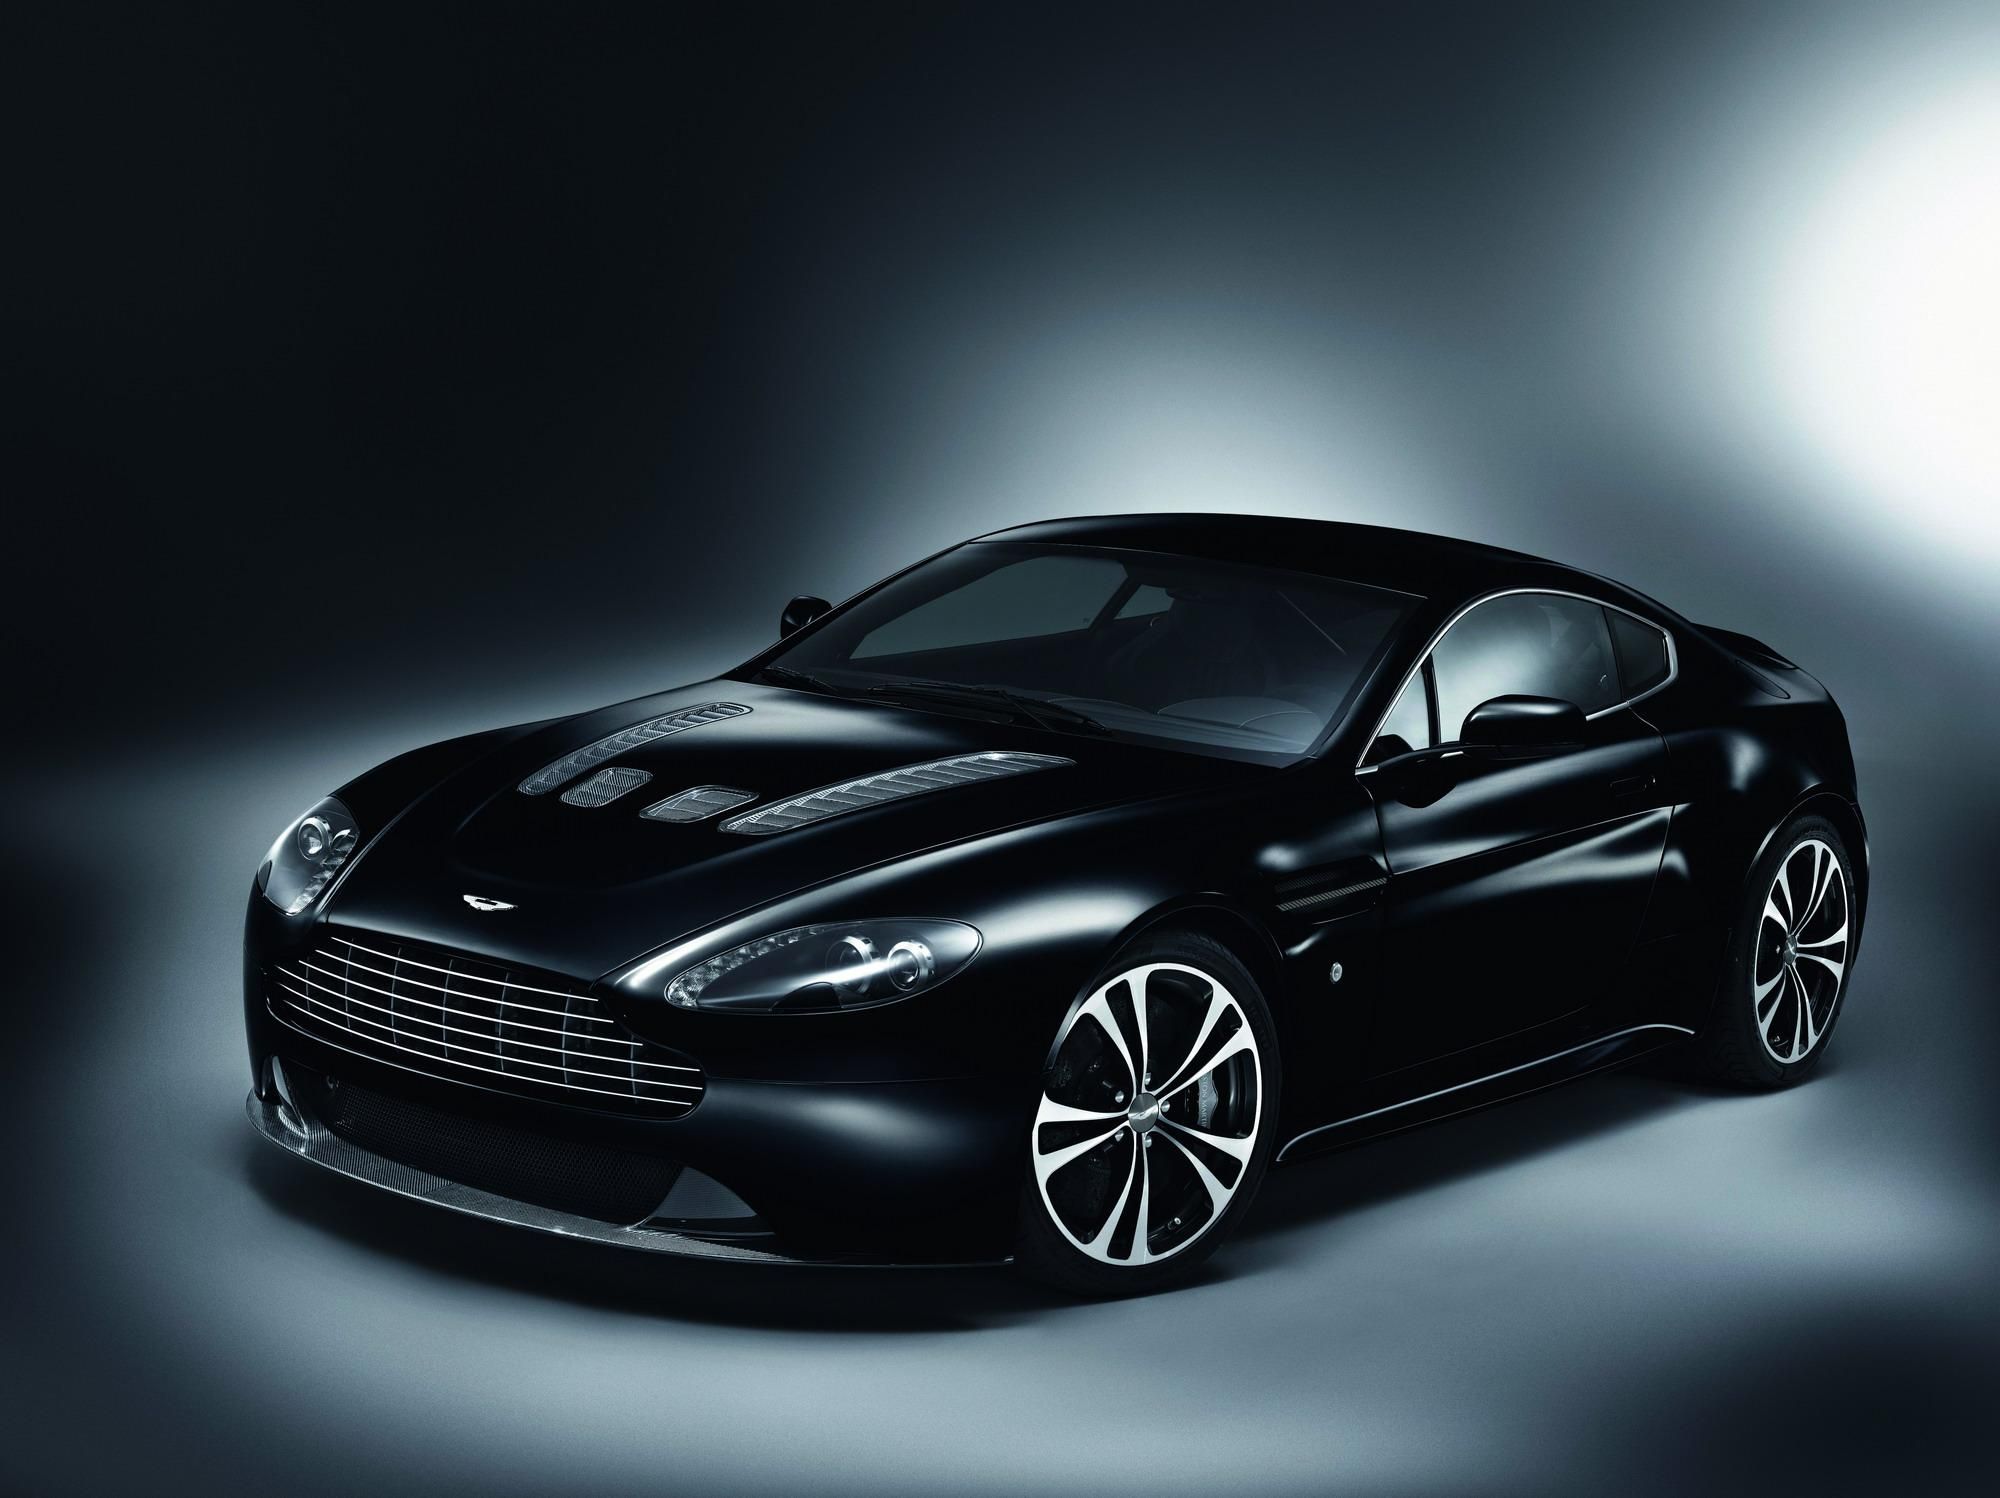 2010 Aston Martin DBS and V12 Vantage Carbon Black